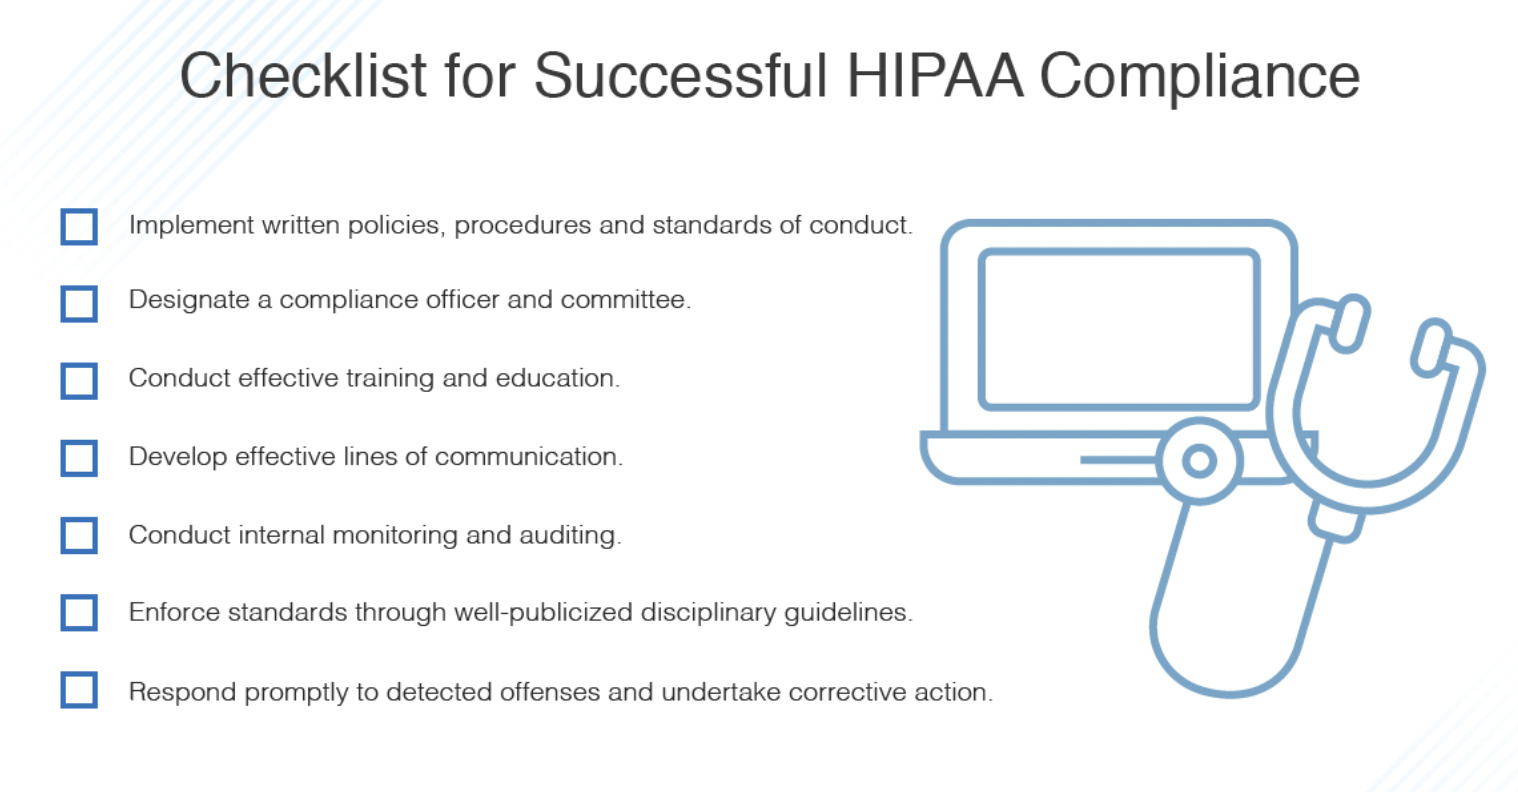 Key Considerations for HIPAA Compliance